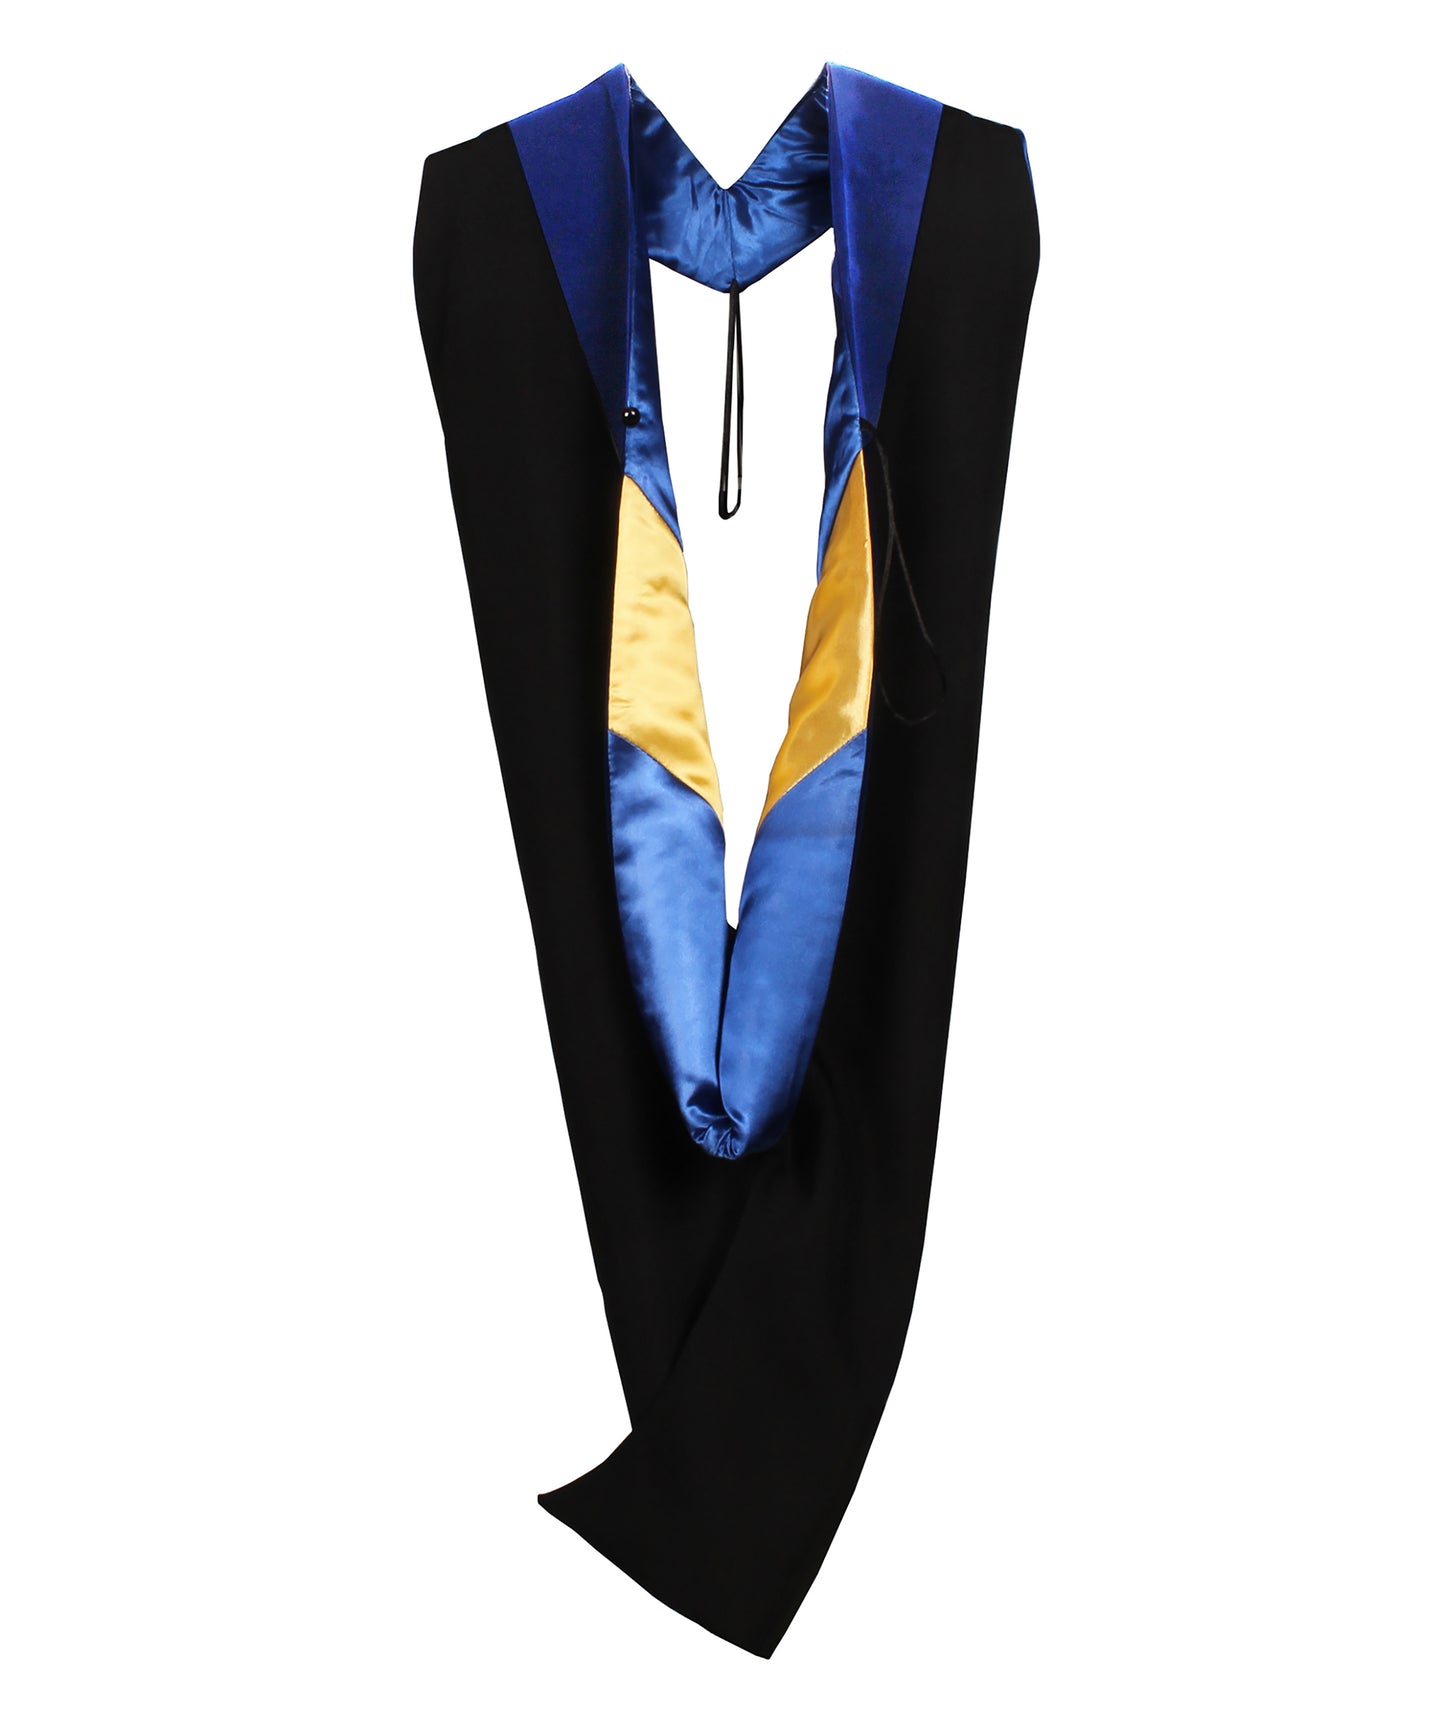 Bachelor & Master Graduation Hood in Various Color|graduation hood|academic gown hood-CA graduation